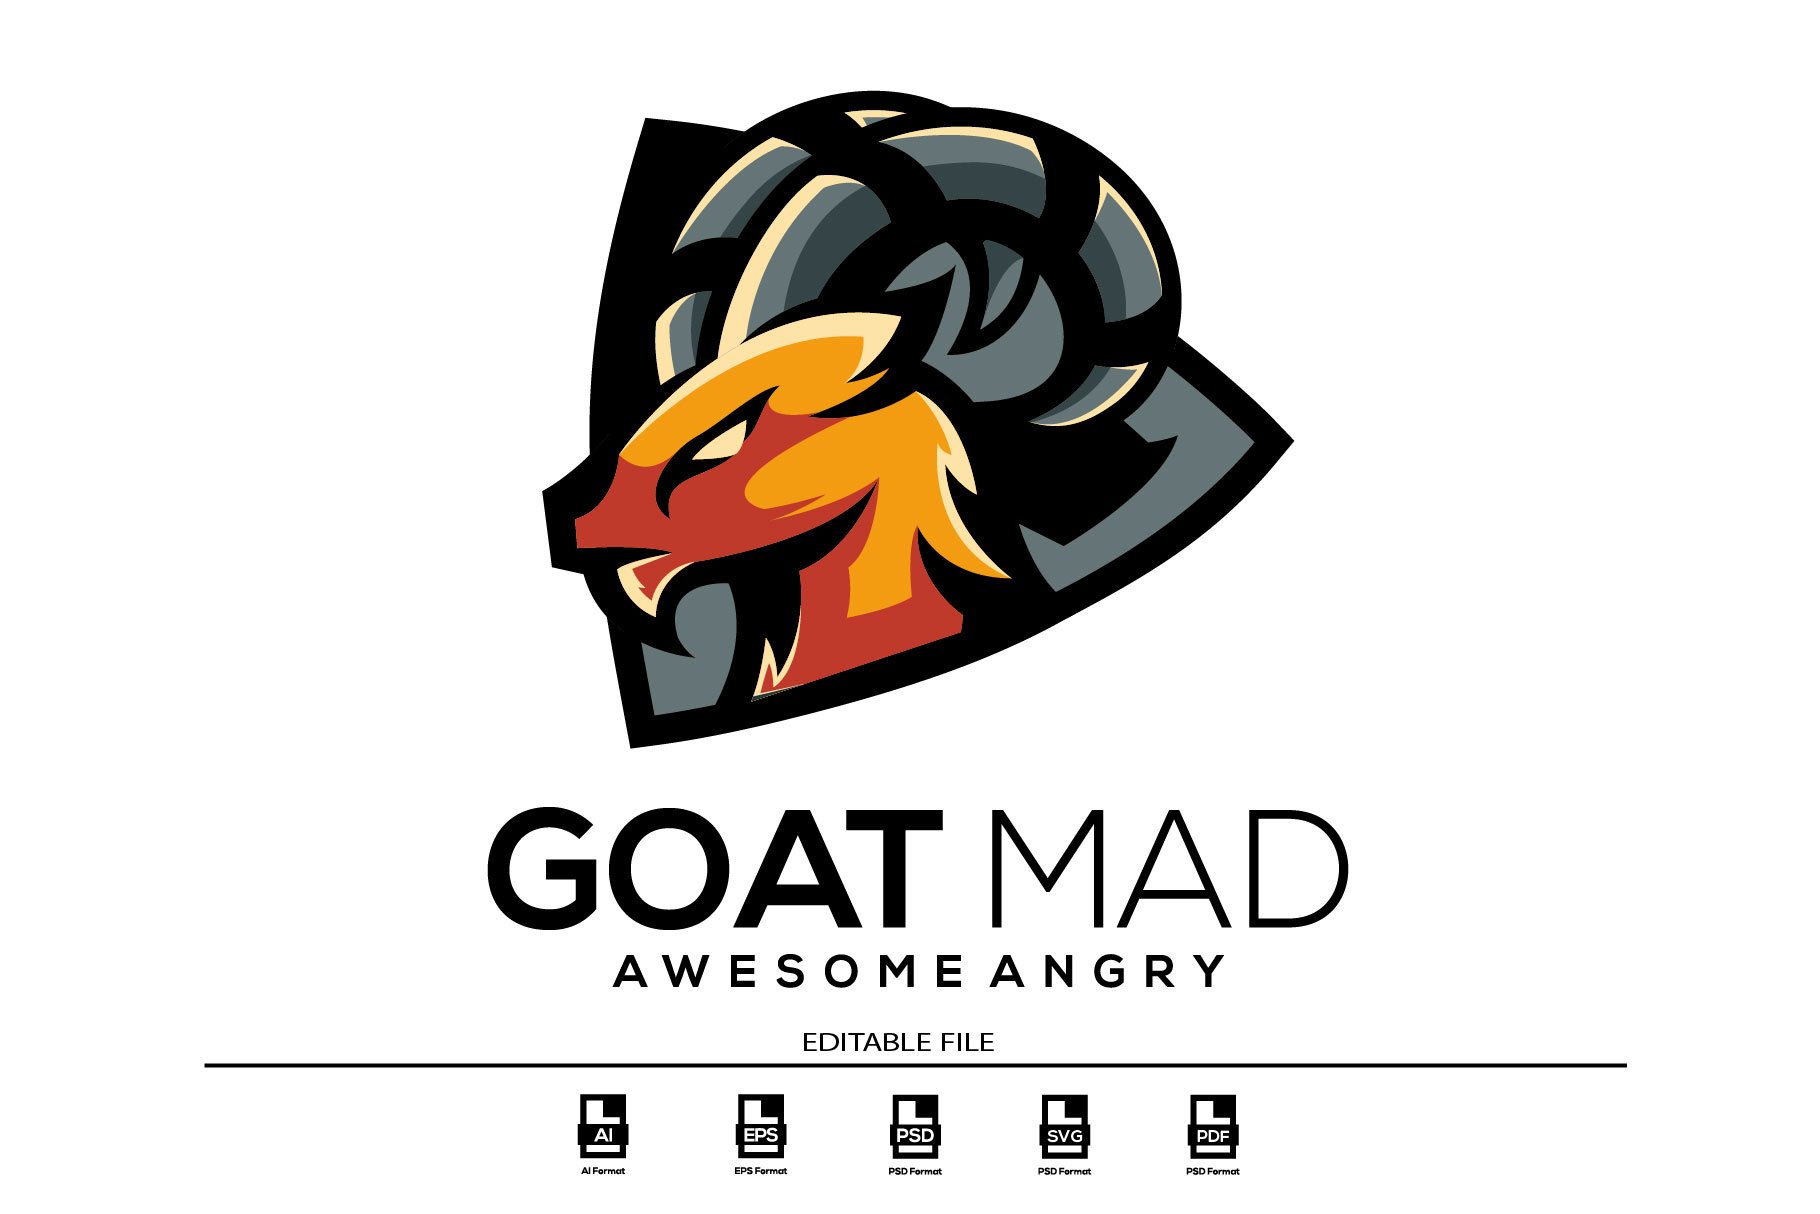 goat mascot logo illustration cover image.